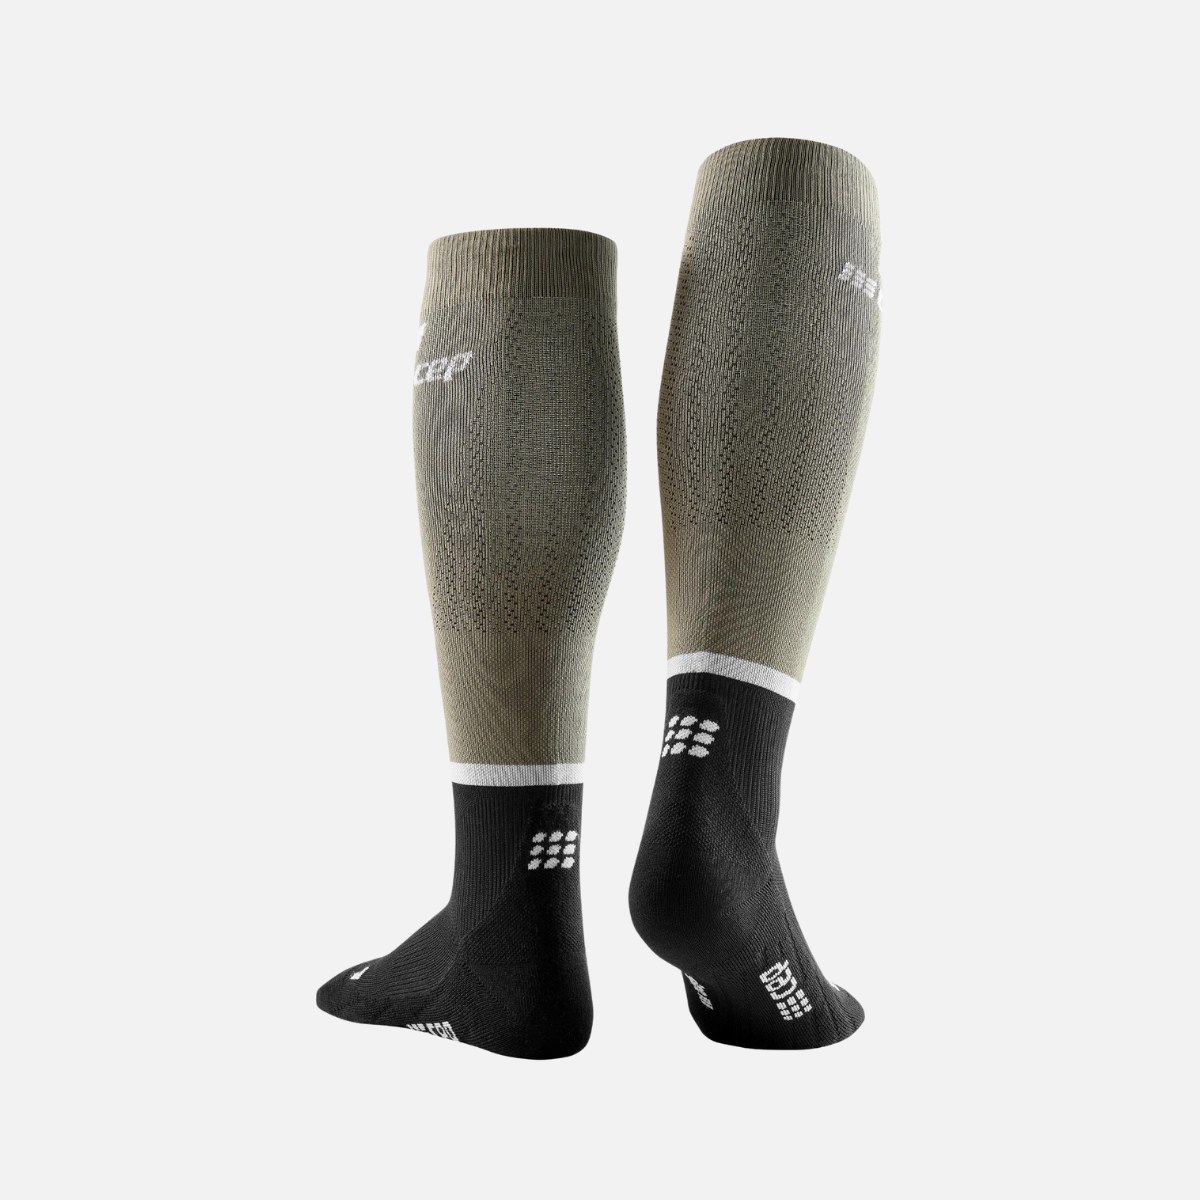 Cep The Run Compression 4.0 Men's Tall Socks -Olive/Black